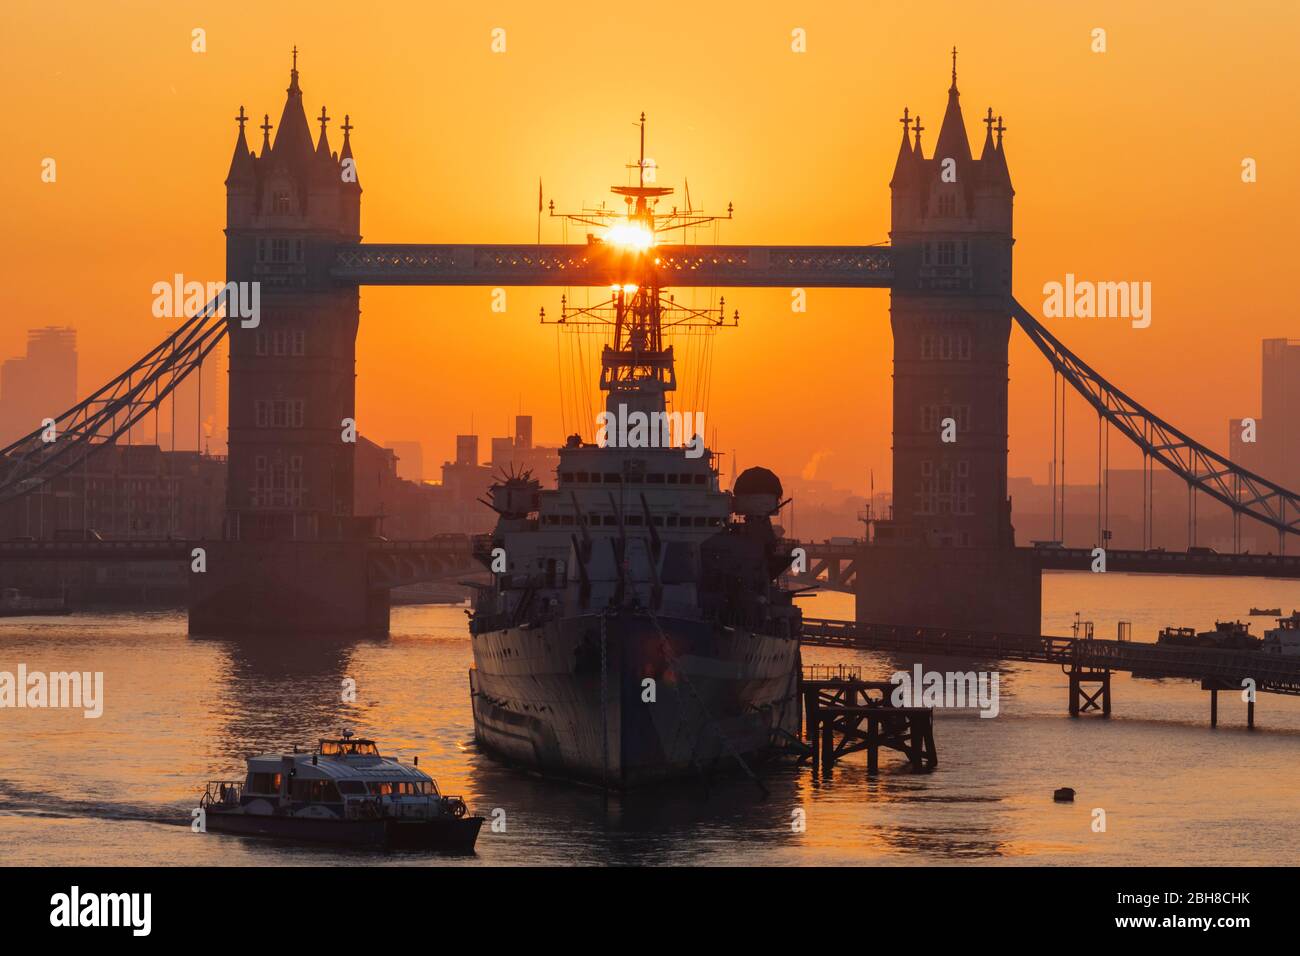 England, London, Tower Bridge and Museum Ship HMS Belfast at Sunrise Stock Photo